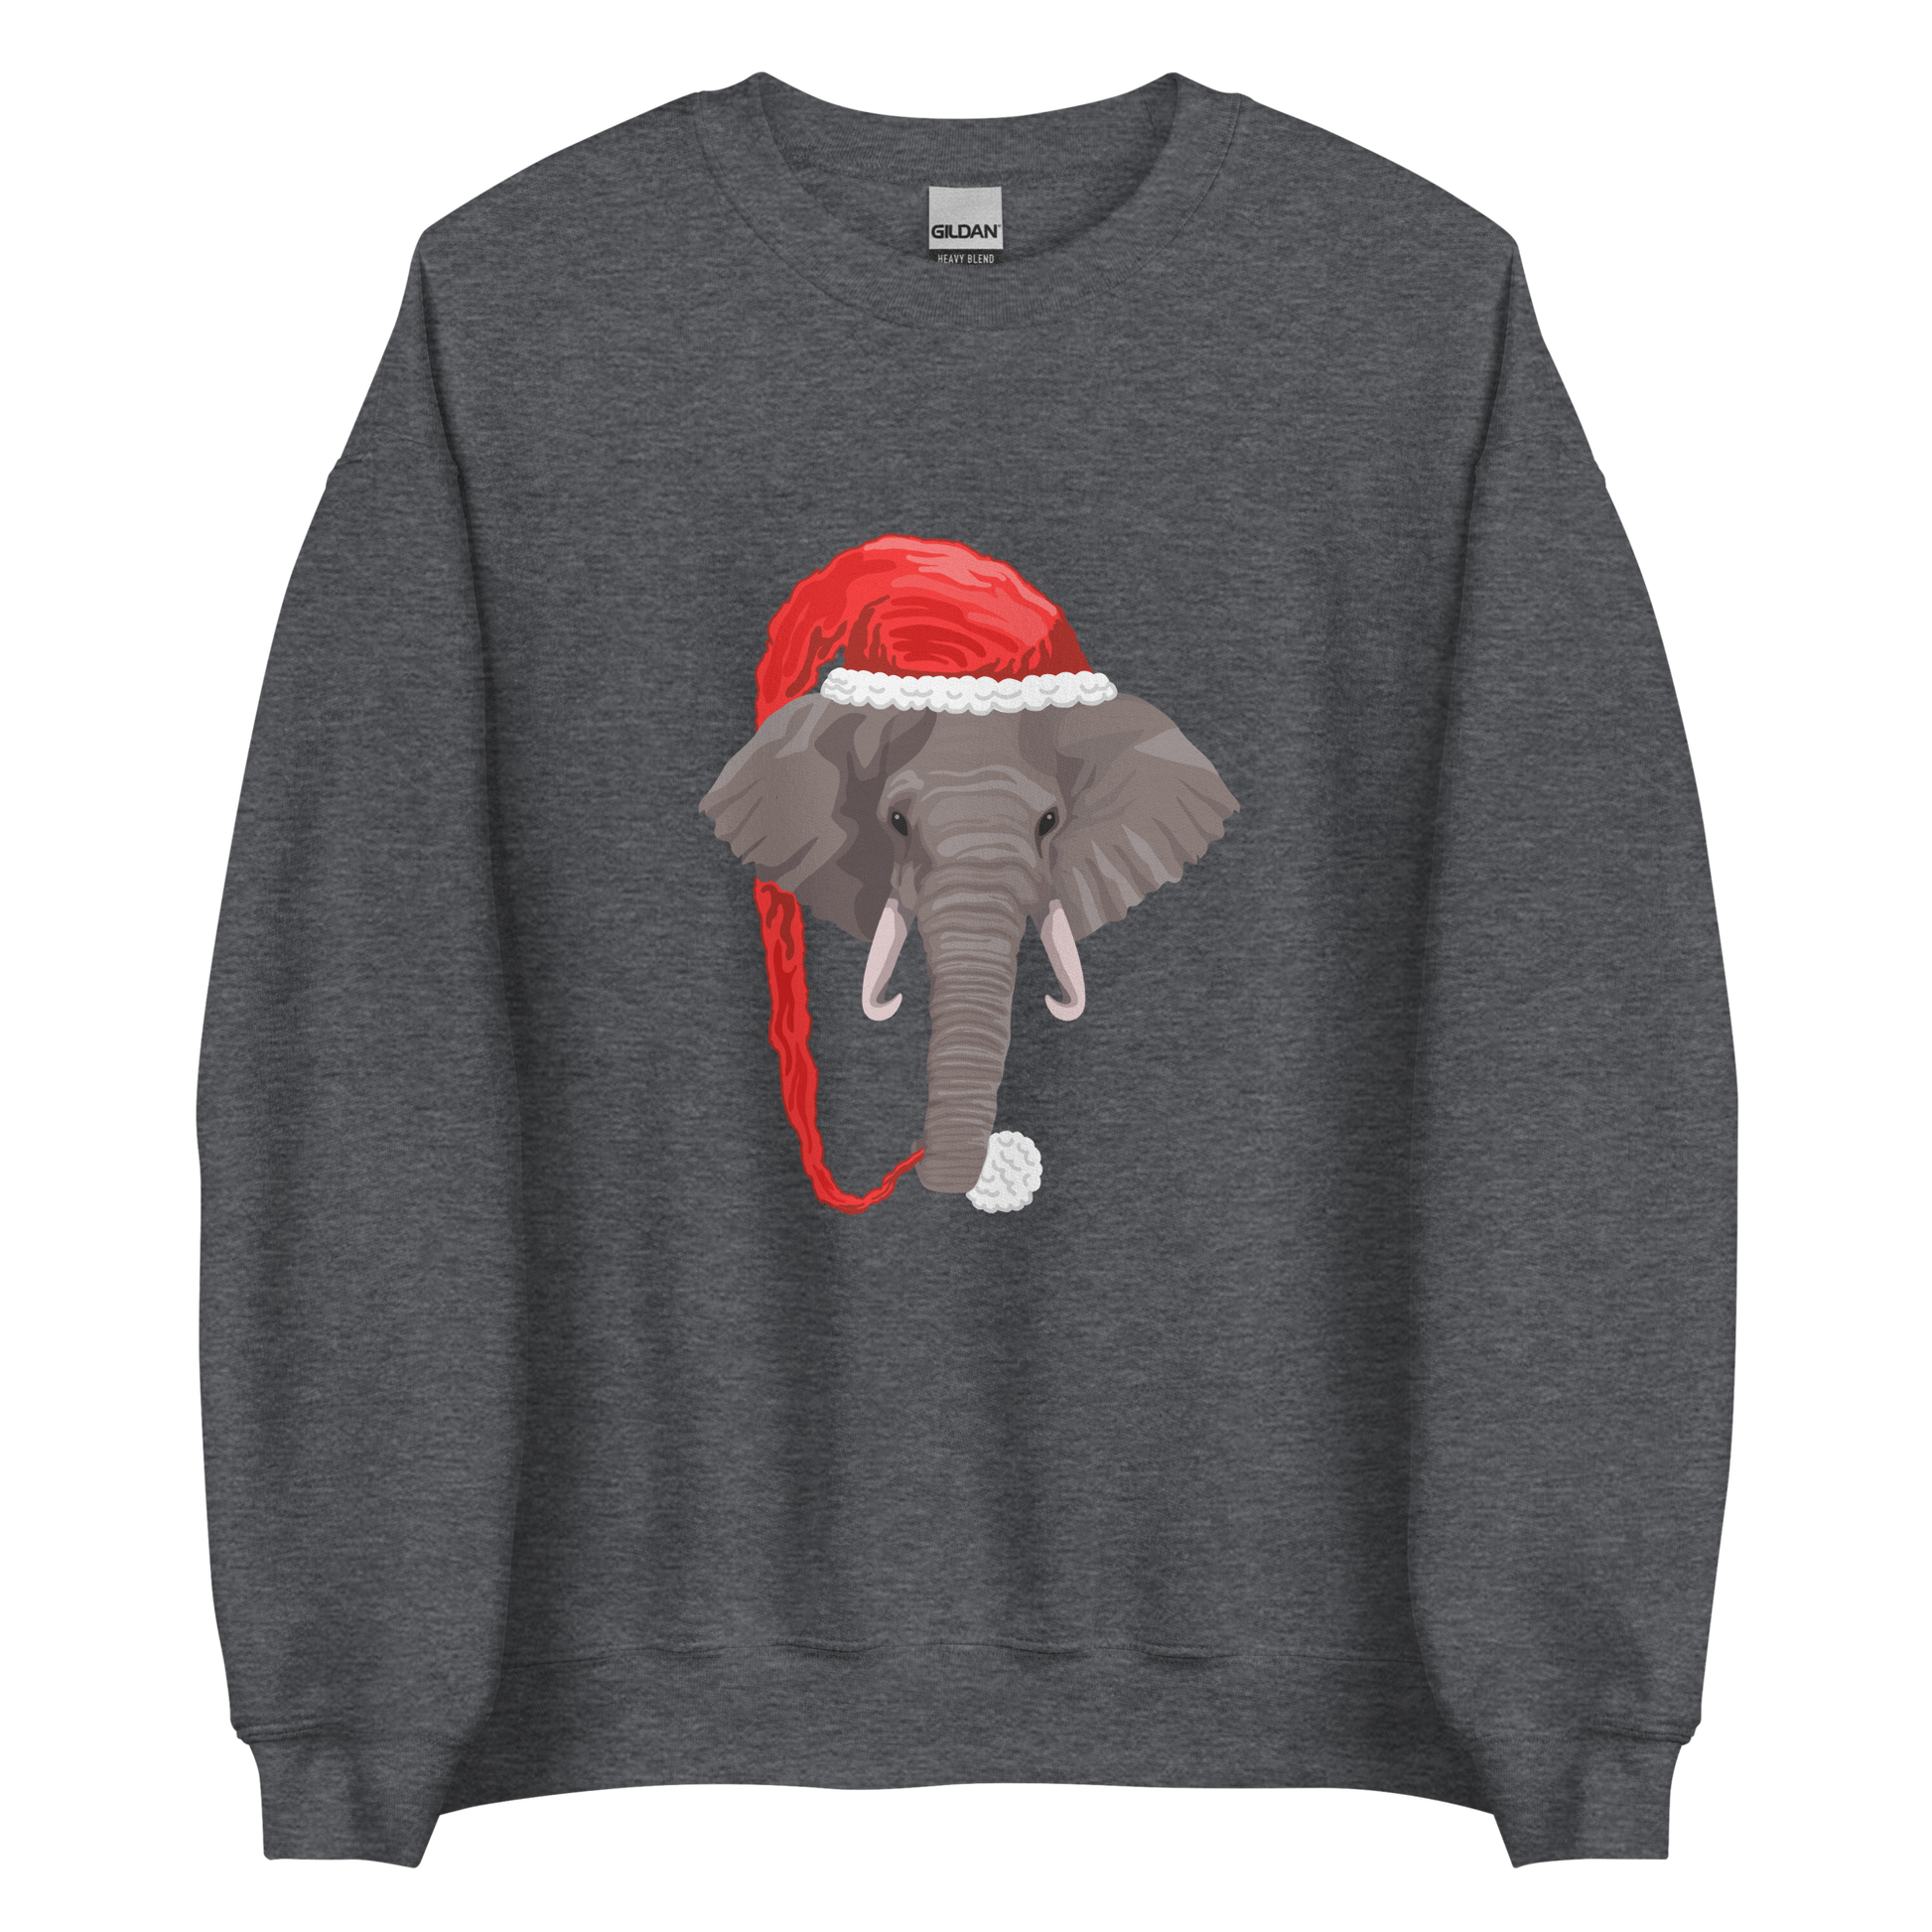 Dark Heather Christmas Elephant Sweatshirt featuring a delight Elephant Wearing an Elf Hat graphic on the chest - Funny Christmas Graphic Elephant Sweatshirts - Boozy Fox